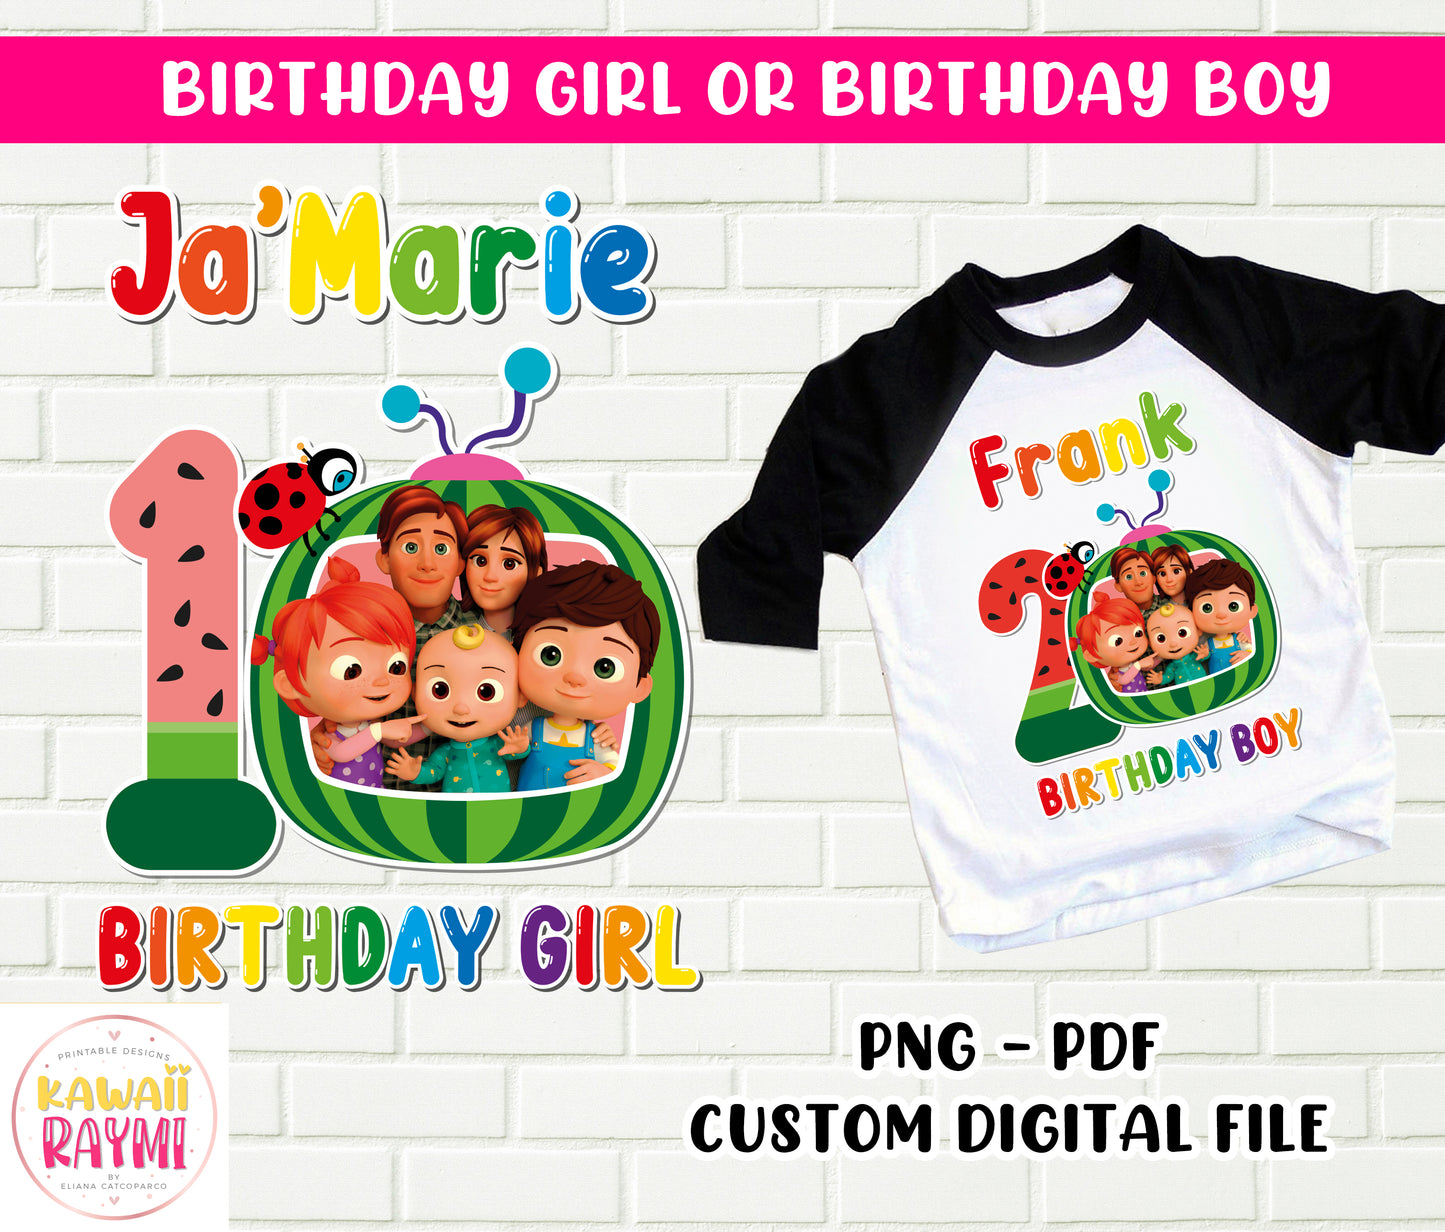 Cocomelon custom birthday shirt DIGITAL FILE - PNG - PDF